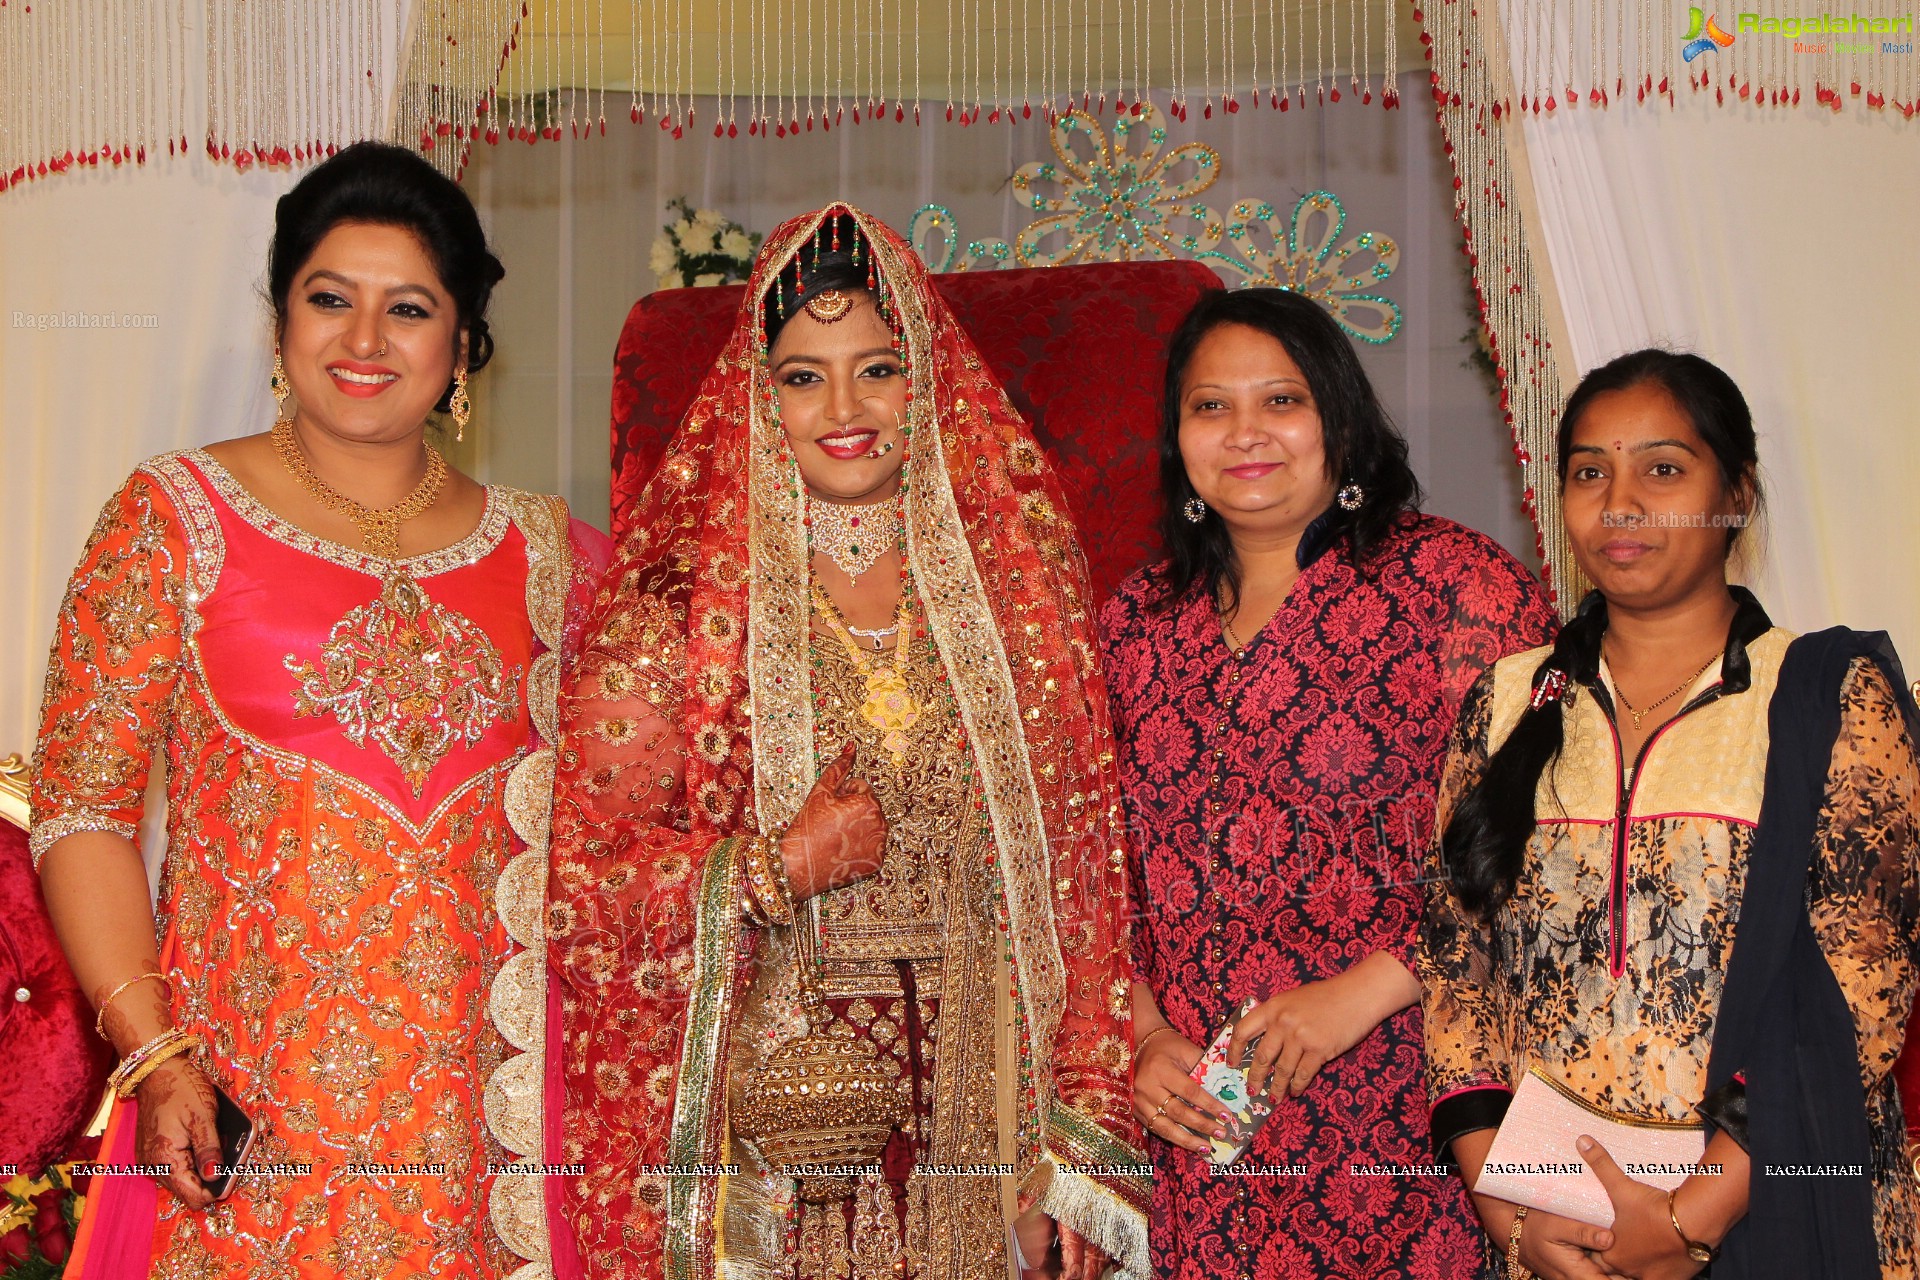 Grand Wedding of Sana's Daughter Tabasum